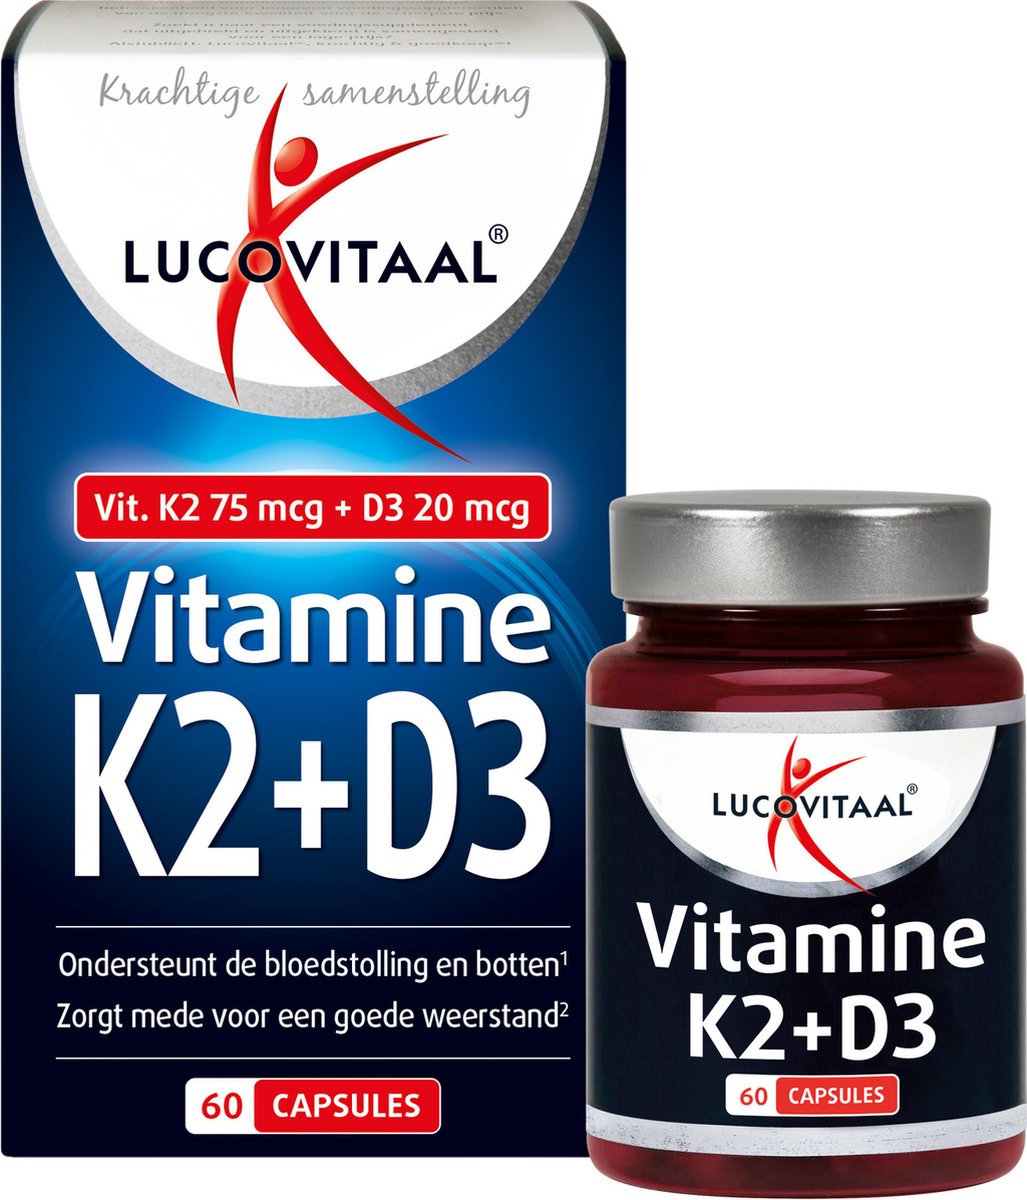 Lucovitaal Vitamine K2 + D3 60 capsules | bol.com